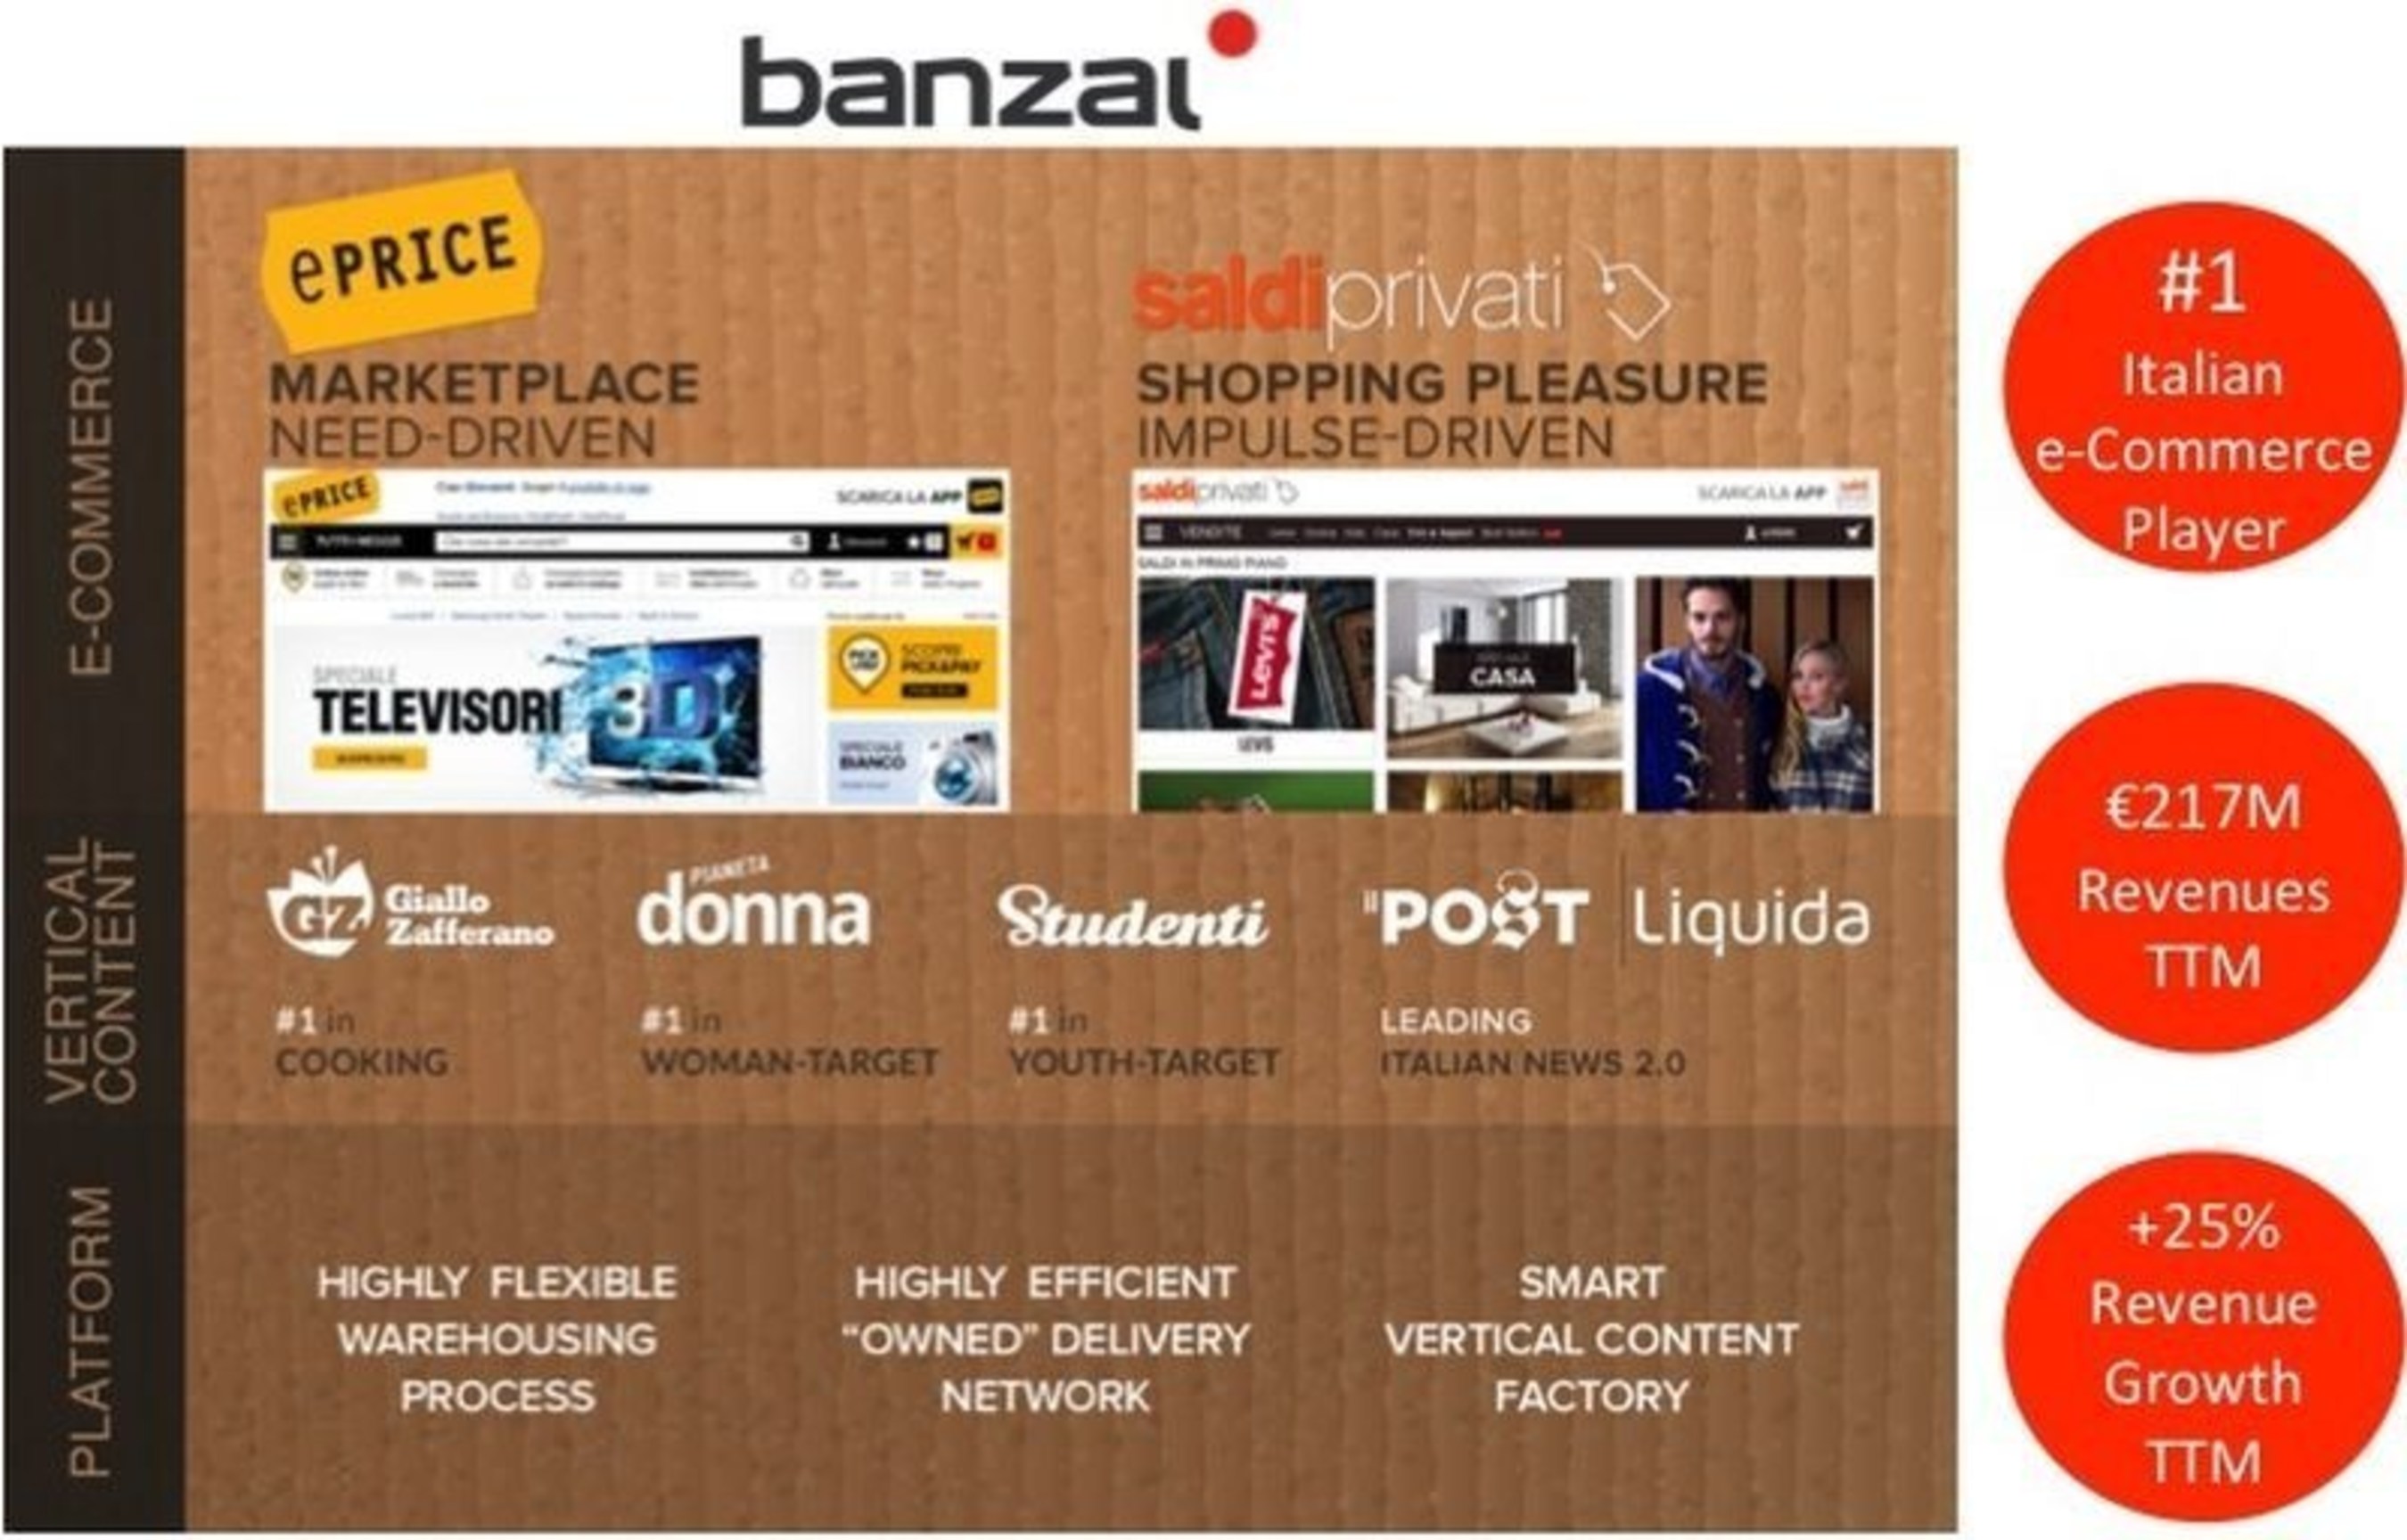 BANZAI IN A BOX (PRNewsFoto/Banzai Spa) (PRNewsFoto/Banzai Spa)